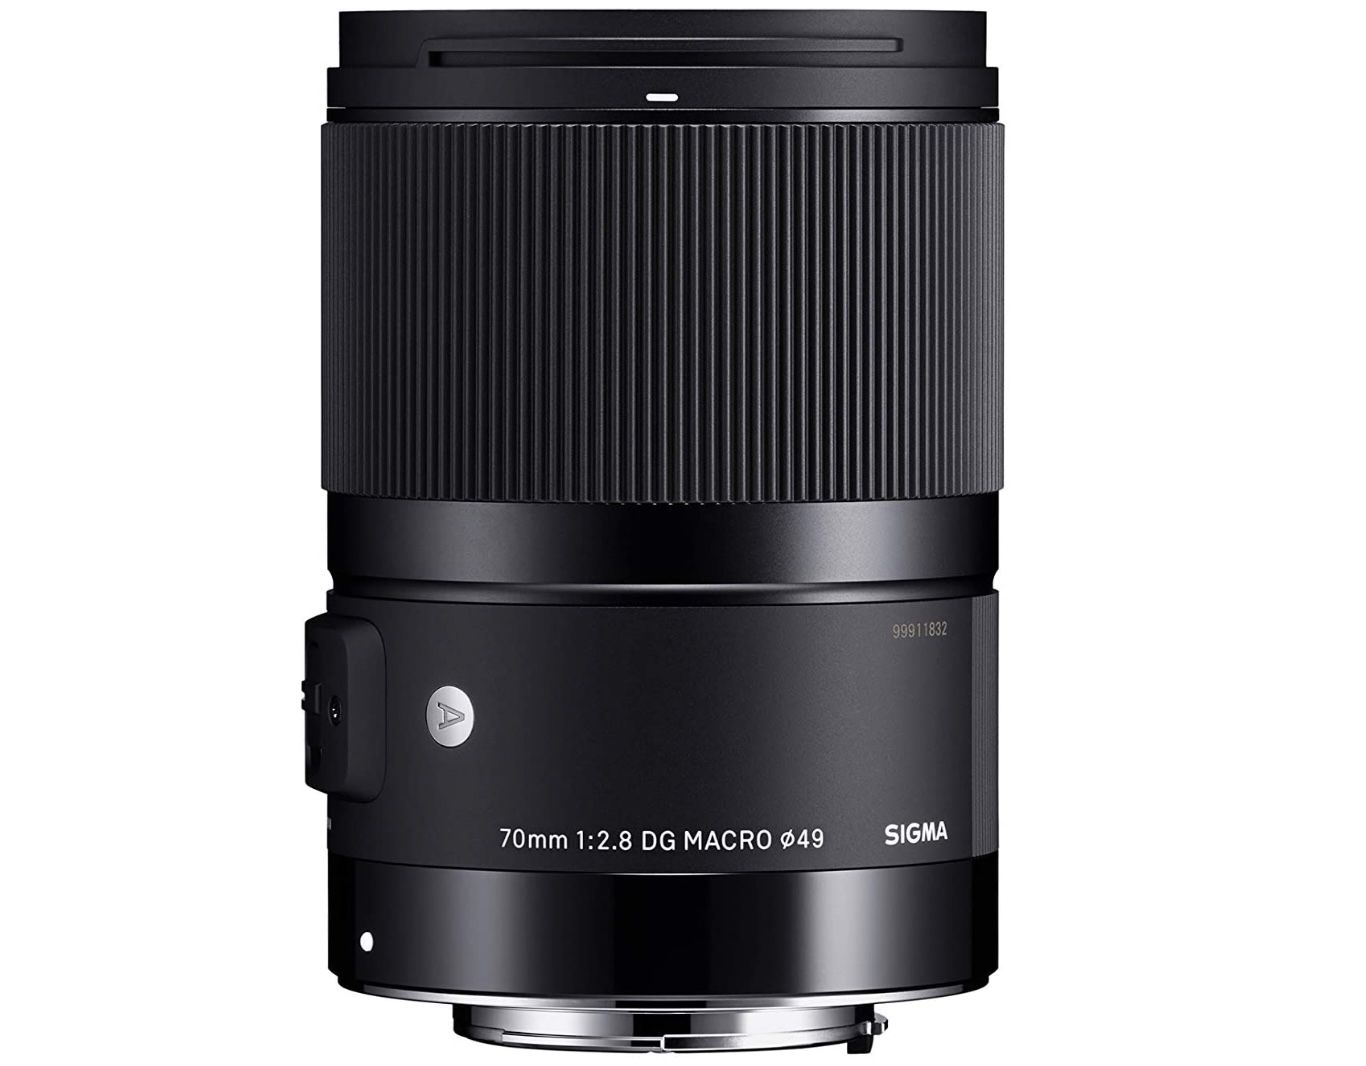 Sigma 70mm 271954 F2,8 DG Macro Art Objektiv für Canon Objektivbajonett für 378,17€ (statt 499€)